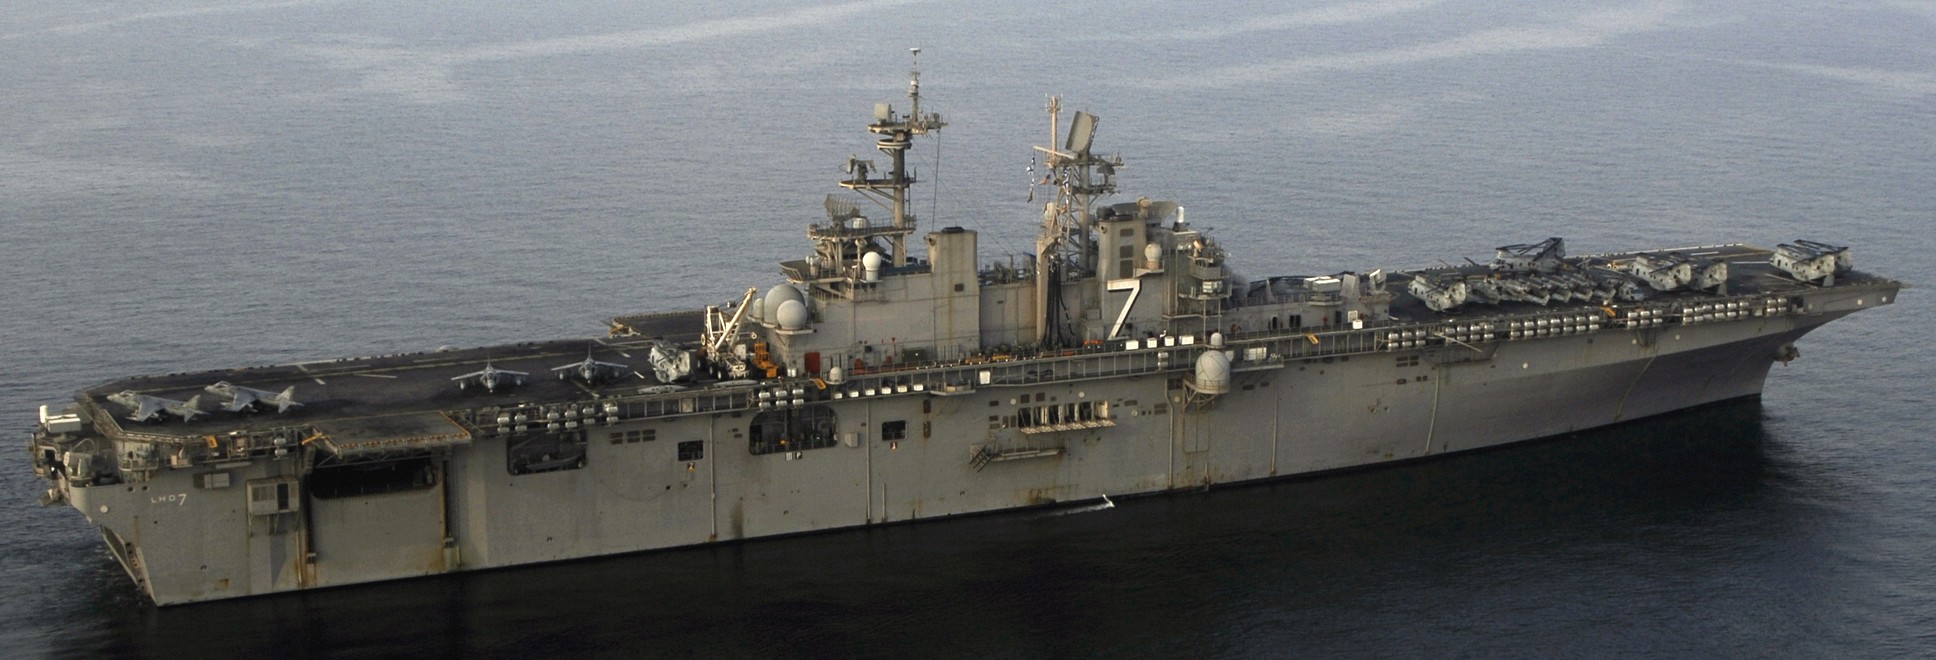 lhd-7 uss iwo jima wasp class amphibious assault ship dock landing helicopter us navy hmm-264 marines 54